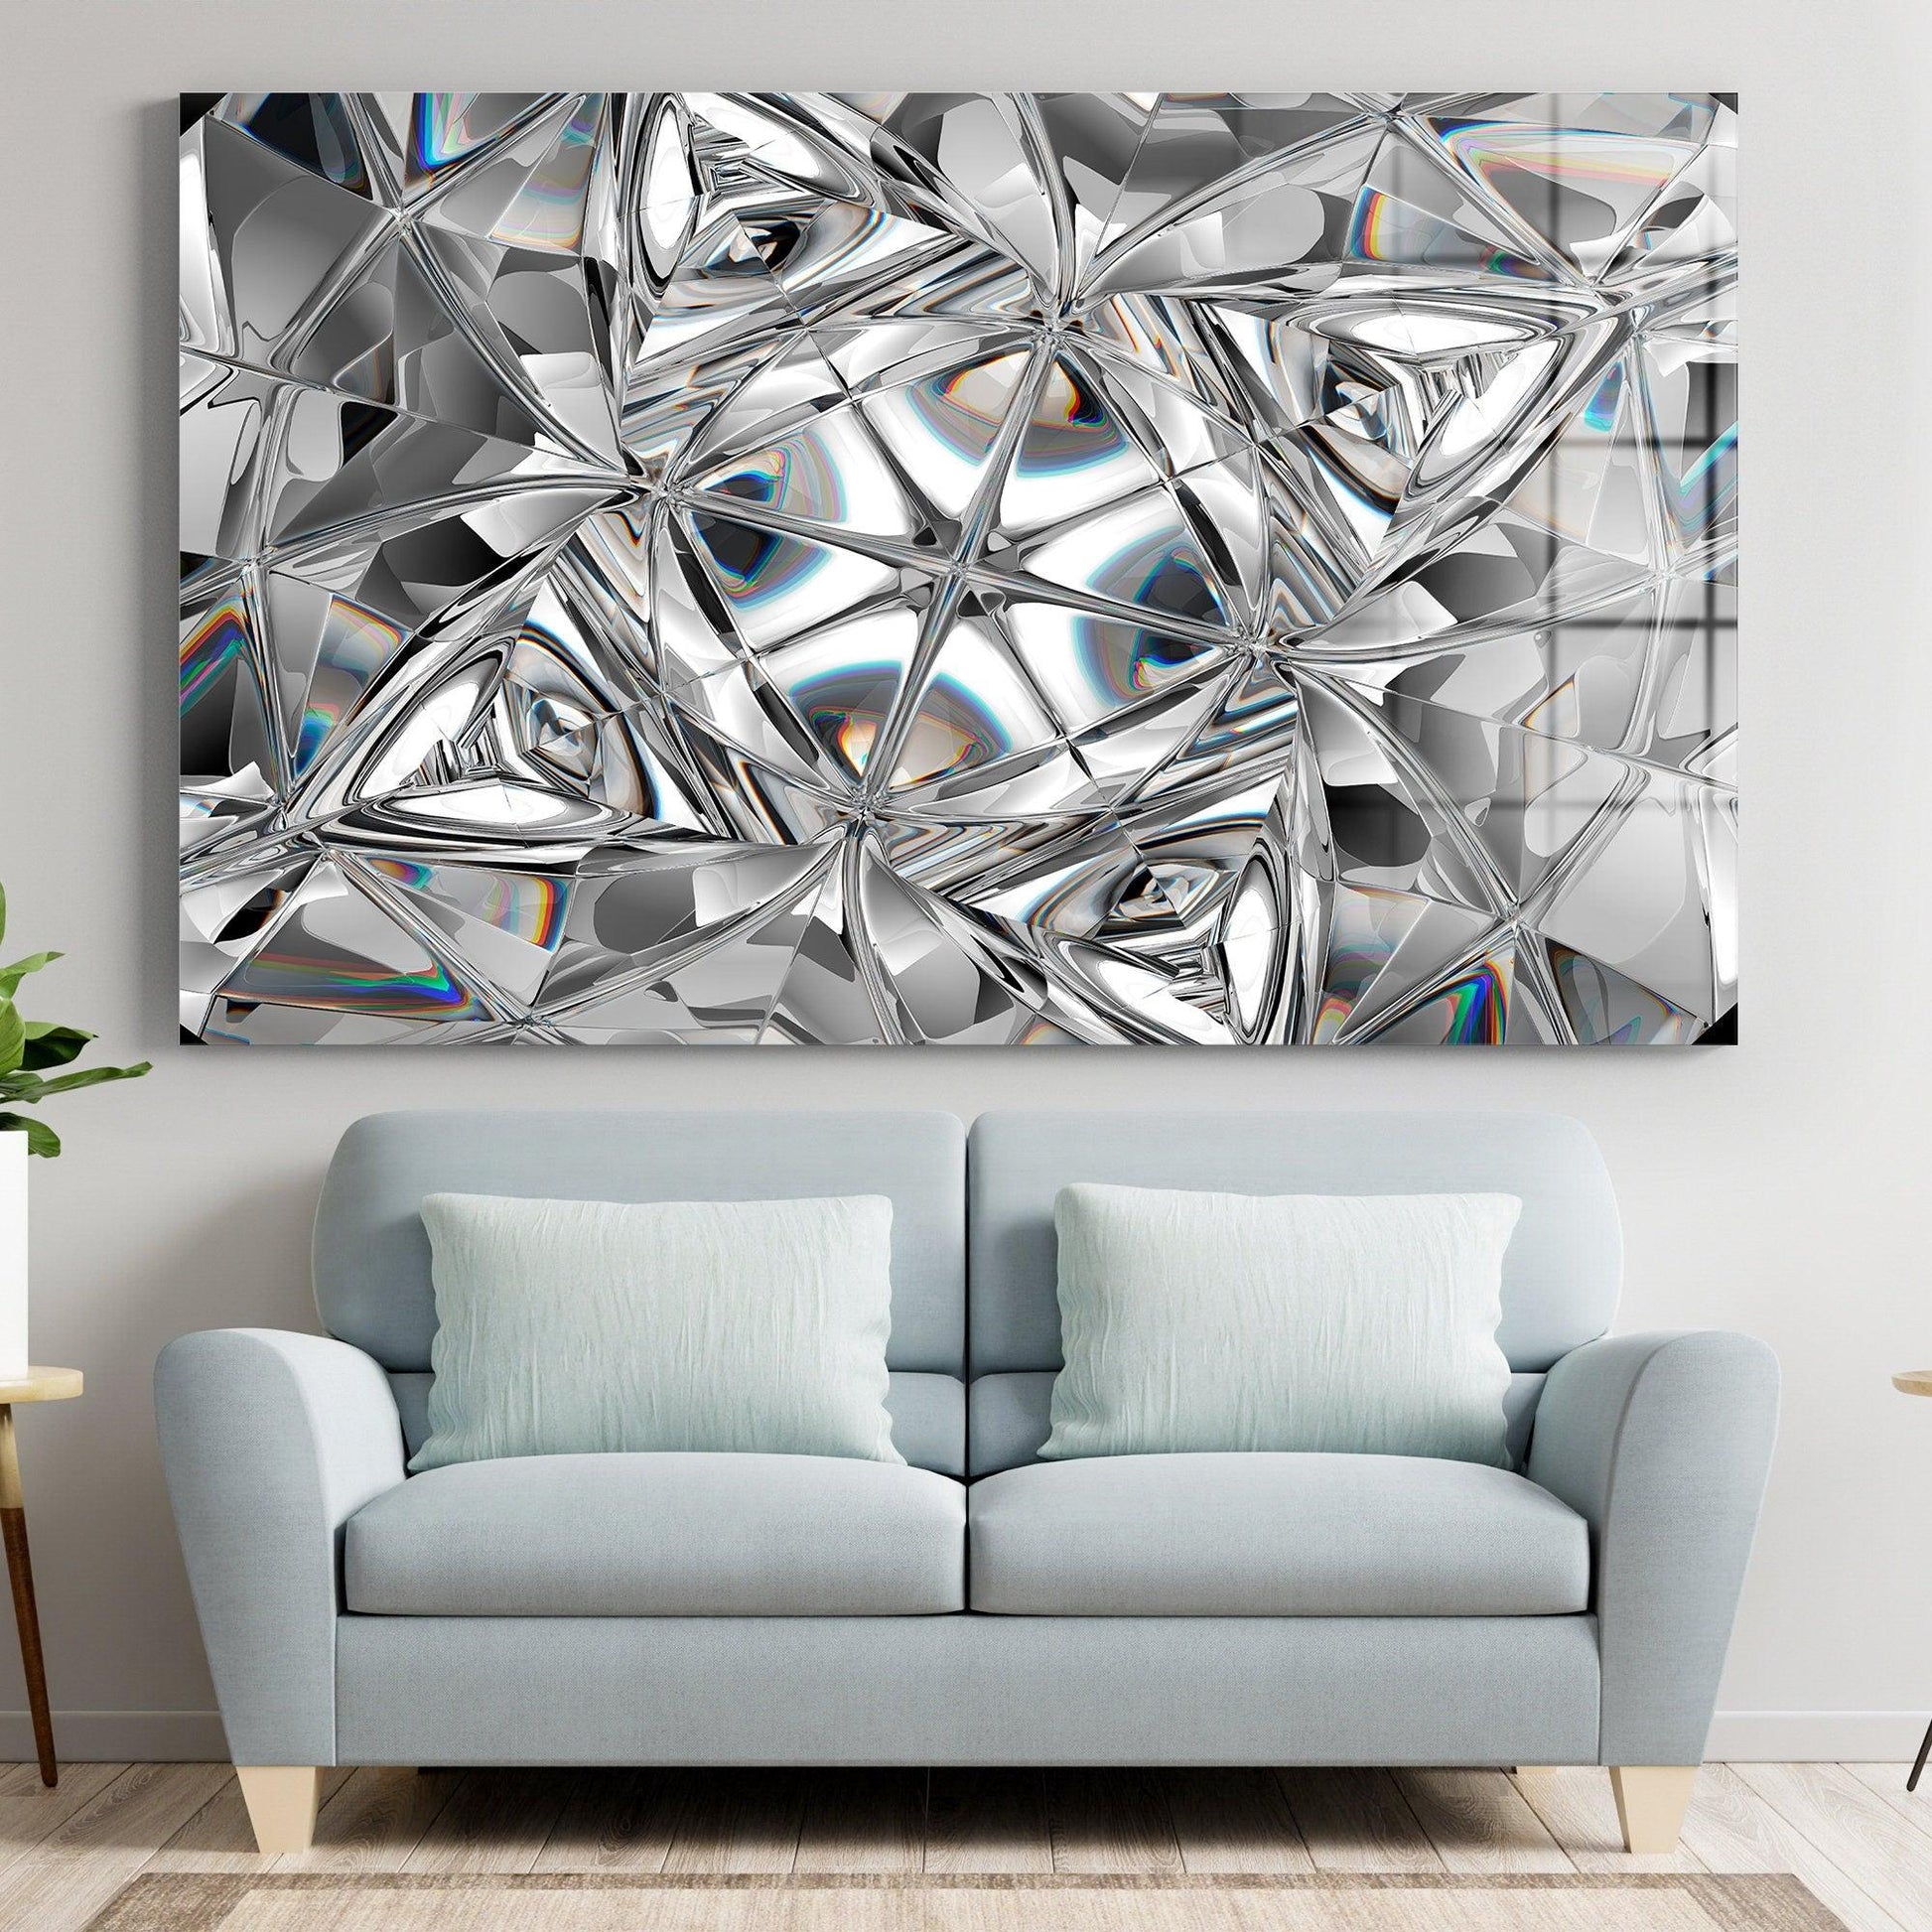 Glass Printing Wall Art| Diamond Wall Art, Brilliant Diamond Cool Wall Art, Silver Wall Art, Vivid Diamond, Luxury Diamonds glass wall art